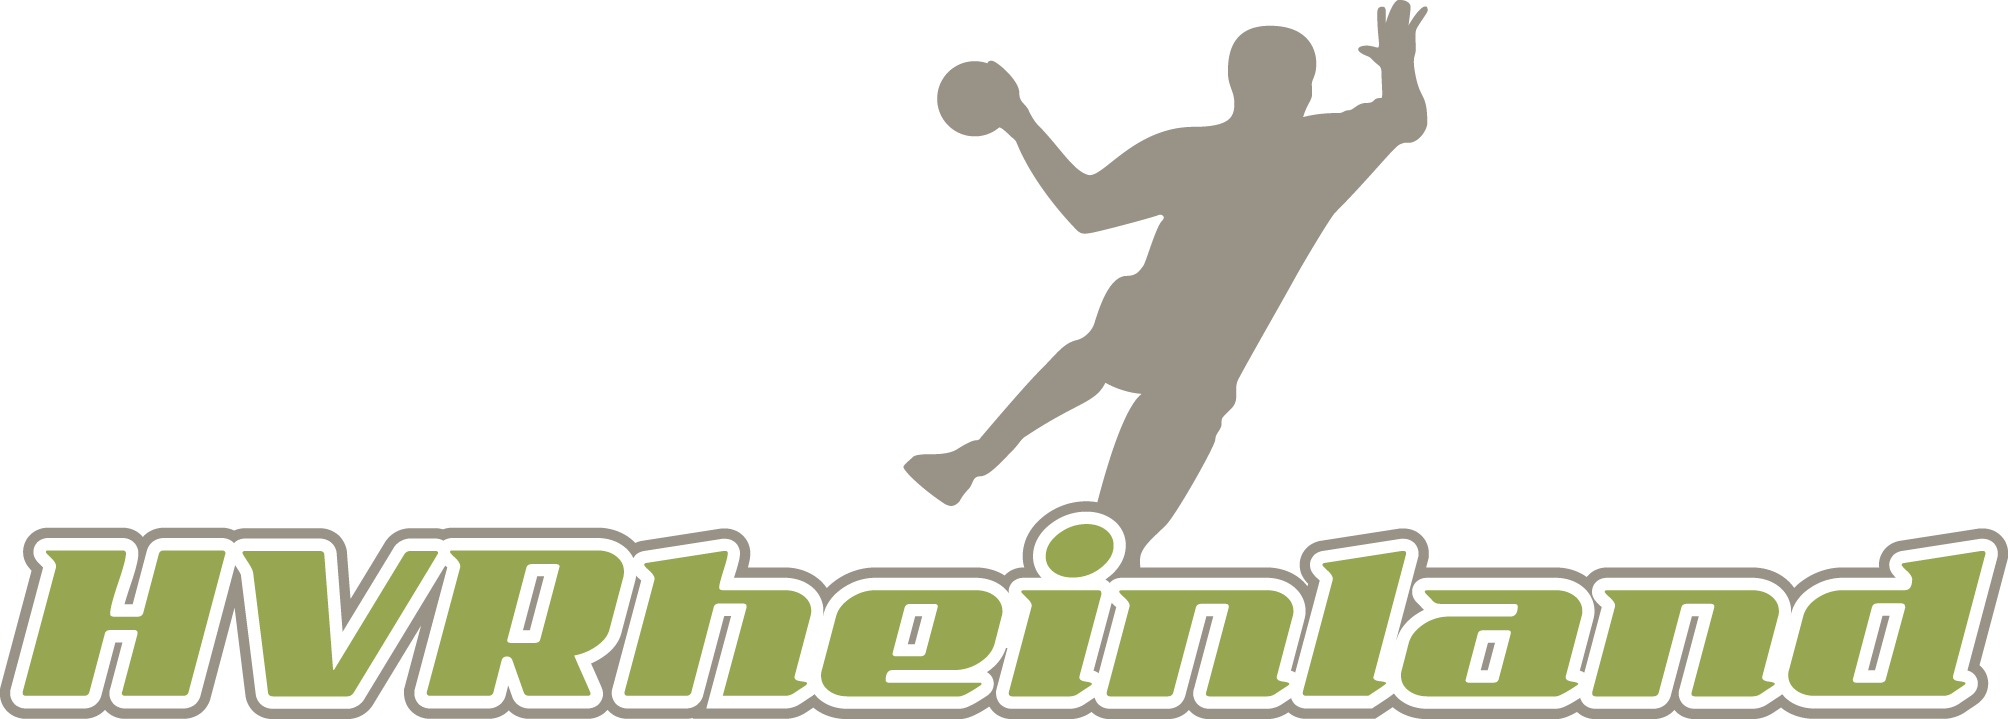 Handball-Verband Rheinland